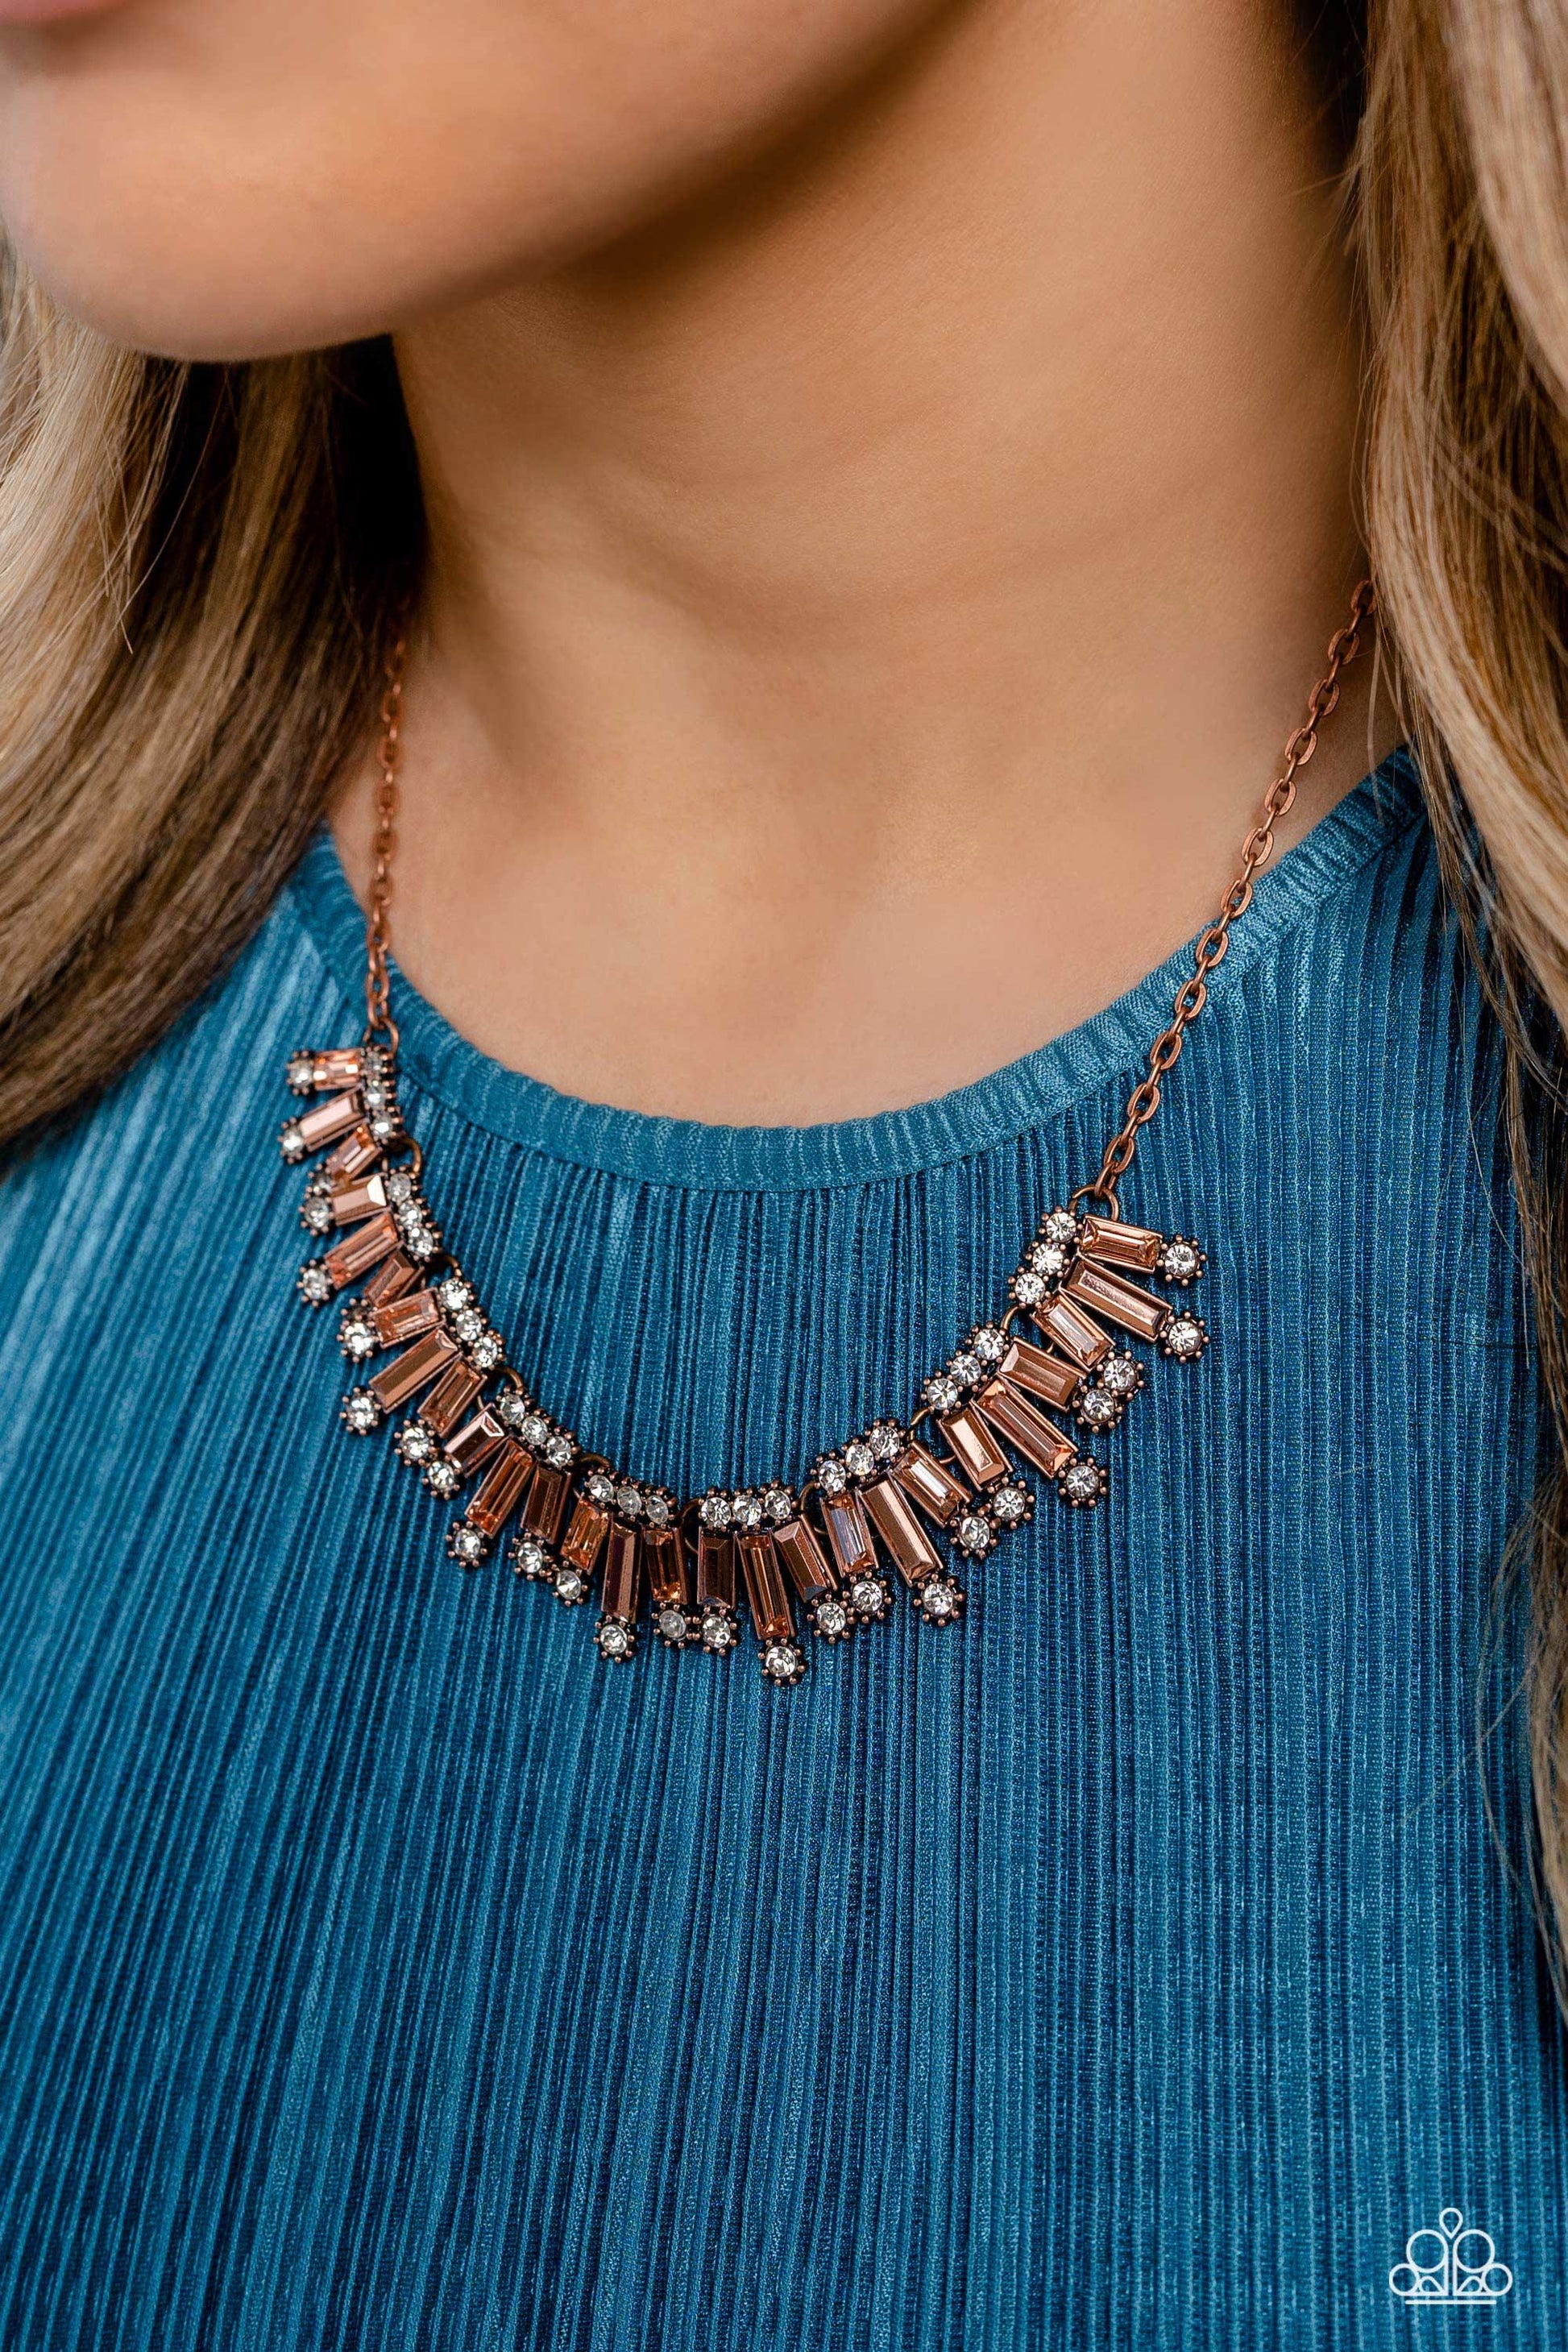 Paparazzi Accessories - Sunburst Season - Copper Necklace - Bling by JessieK